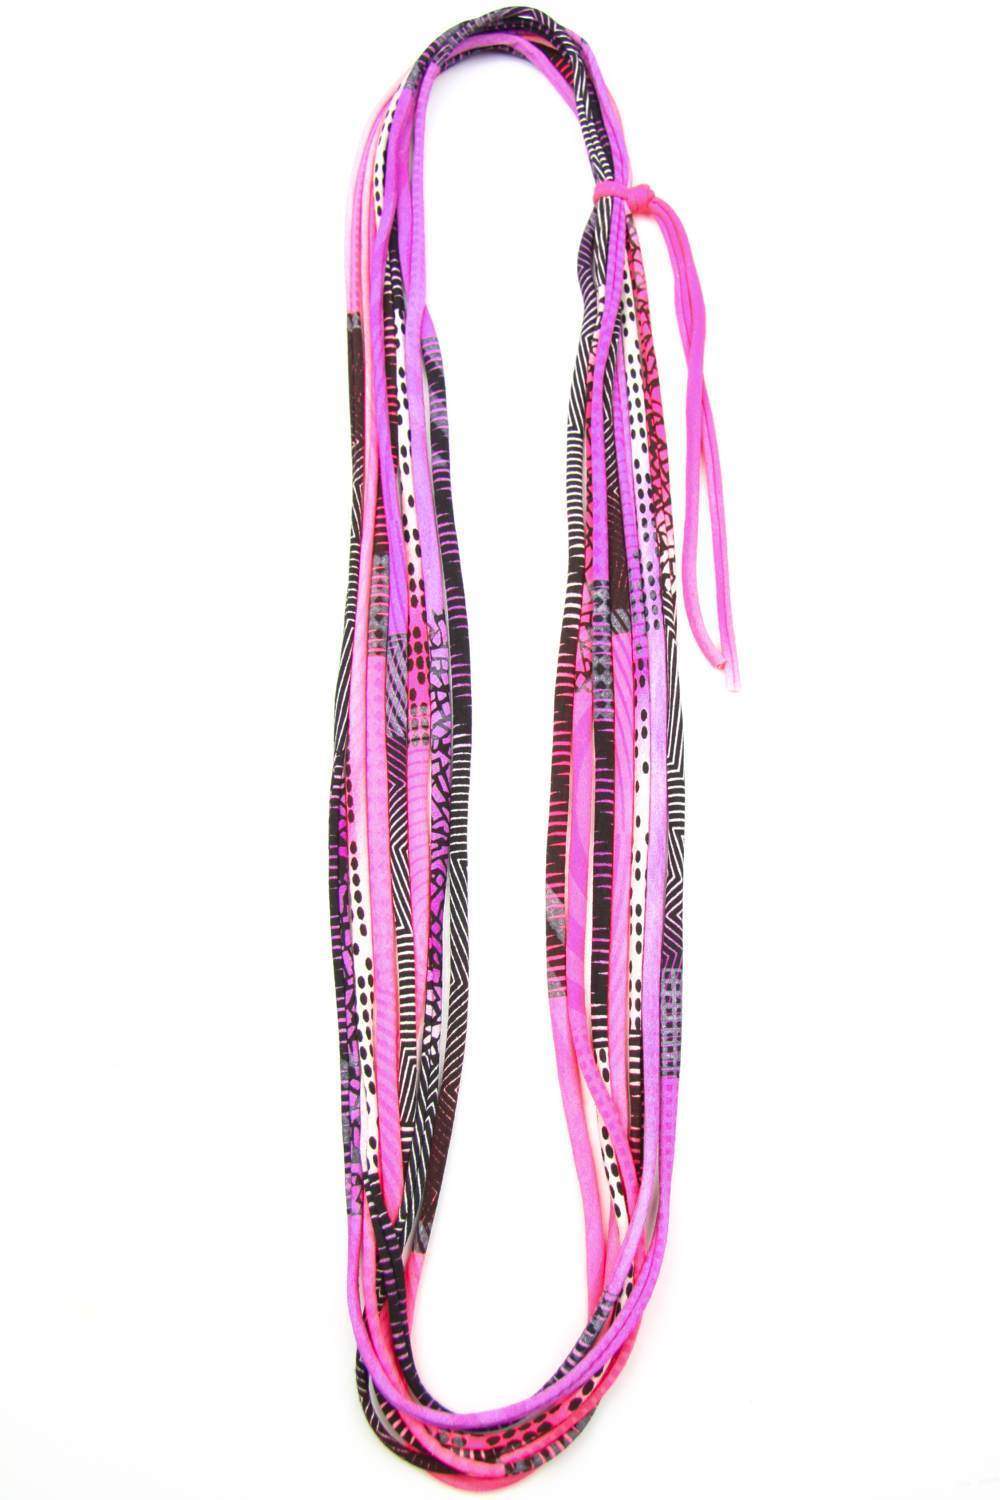 Neon Pink Purple Necklace-necklaces-Necklush